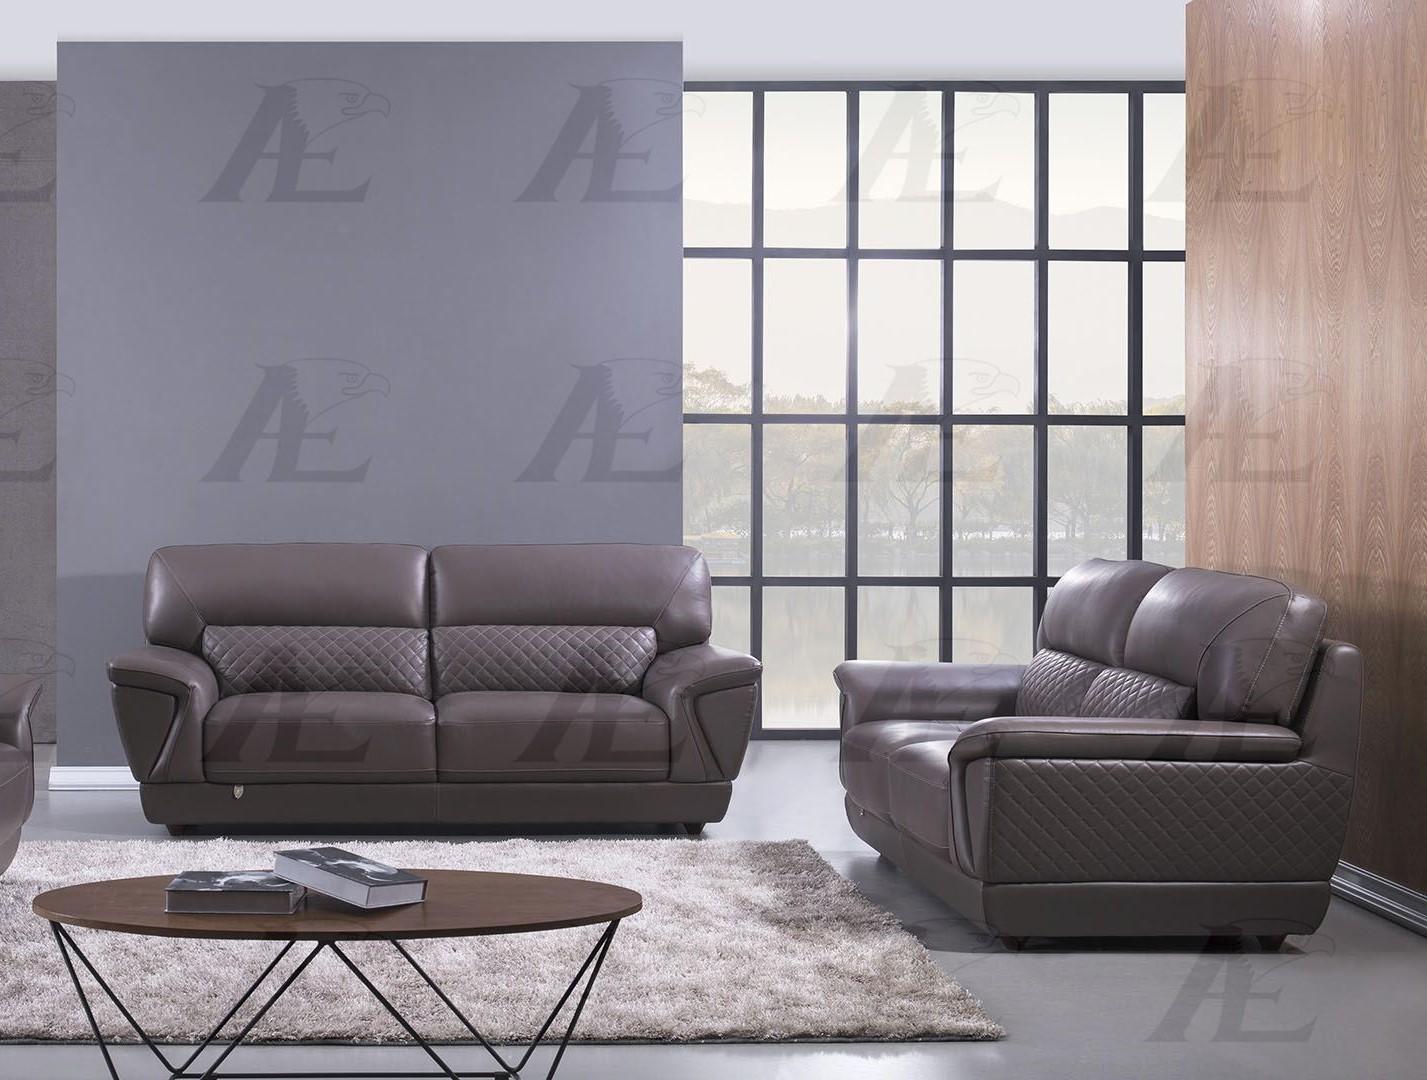 

                    
American Eagle Furniture EK099-DT-SF Sofa Dark Tan Italian Leather Purchase 
